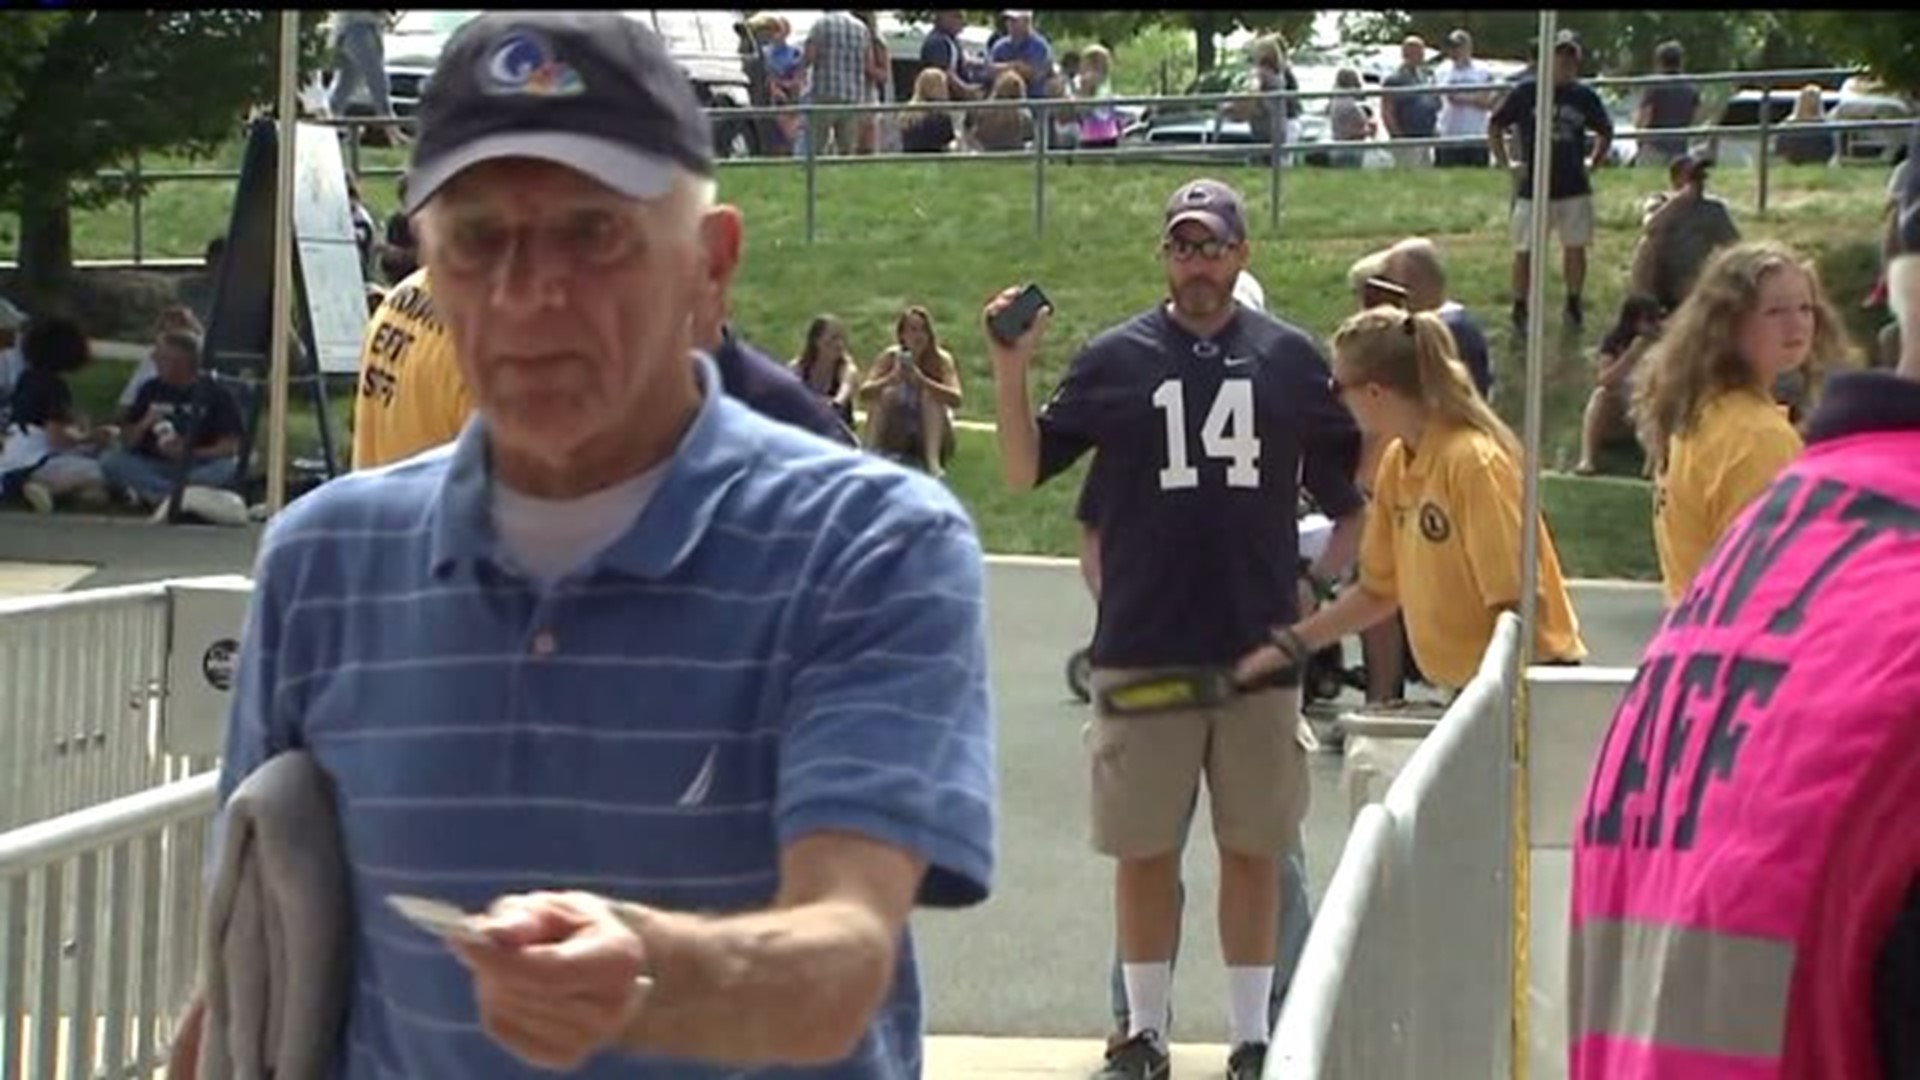 Penn State season opener brings fans to Beaver Stadium